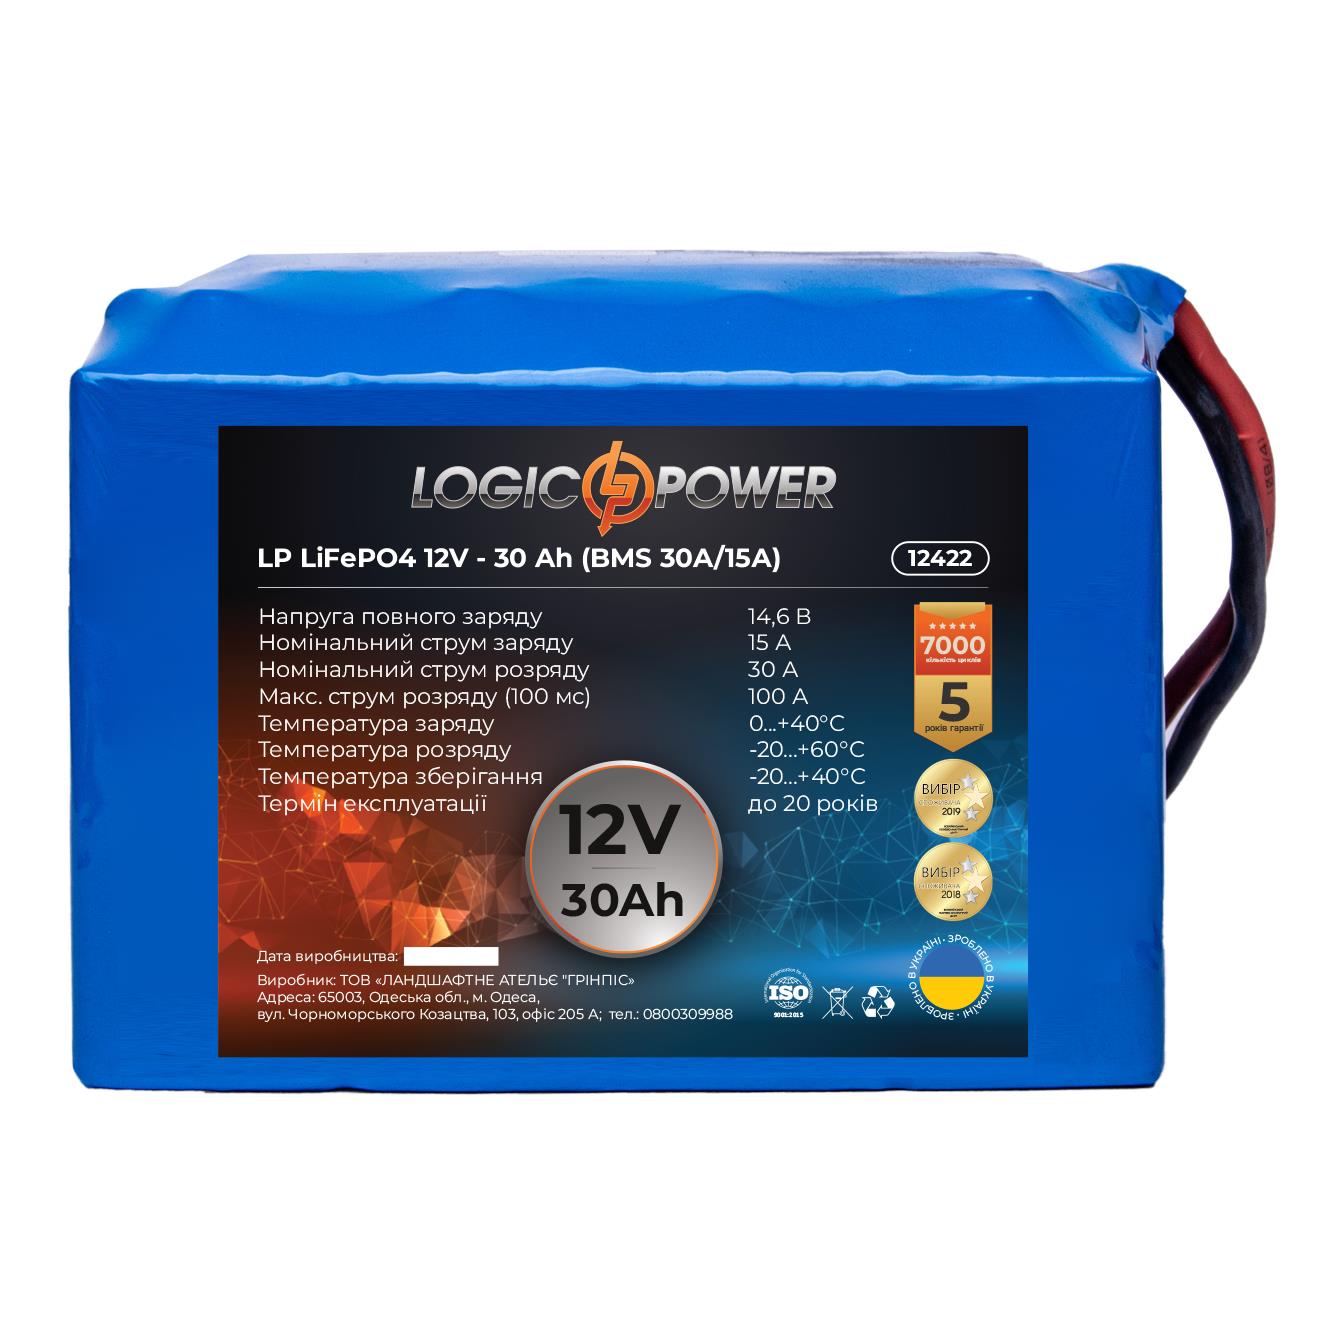 Характеристики аккумулятор литий-железо-фосфатный LogicPower LP LiFePO4 12V - 30 Ah (BMS 30A/15А) (12422)